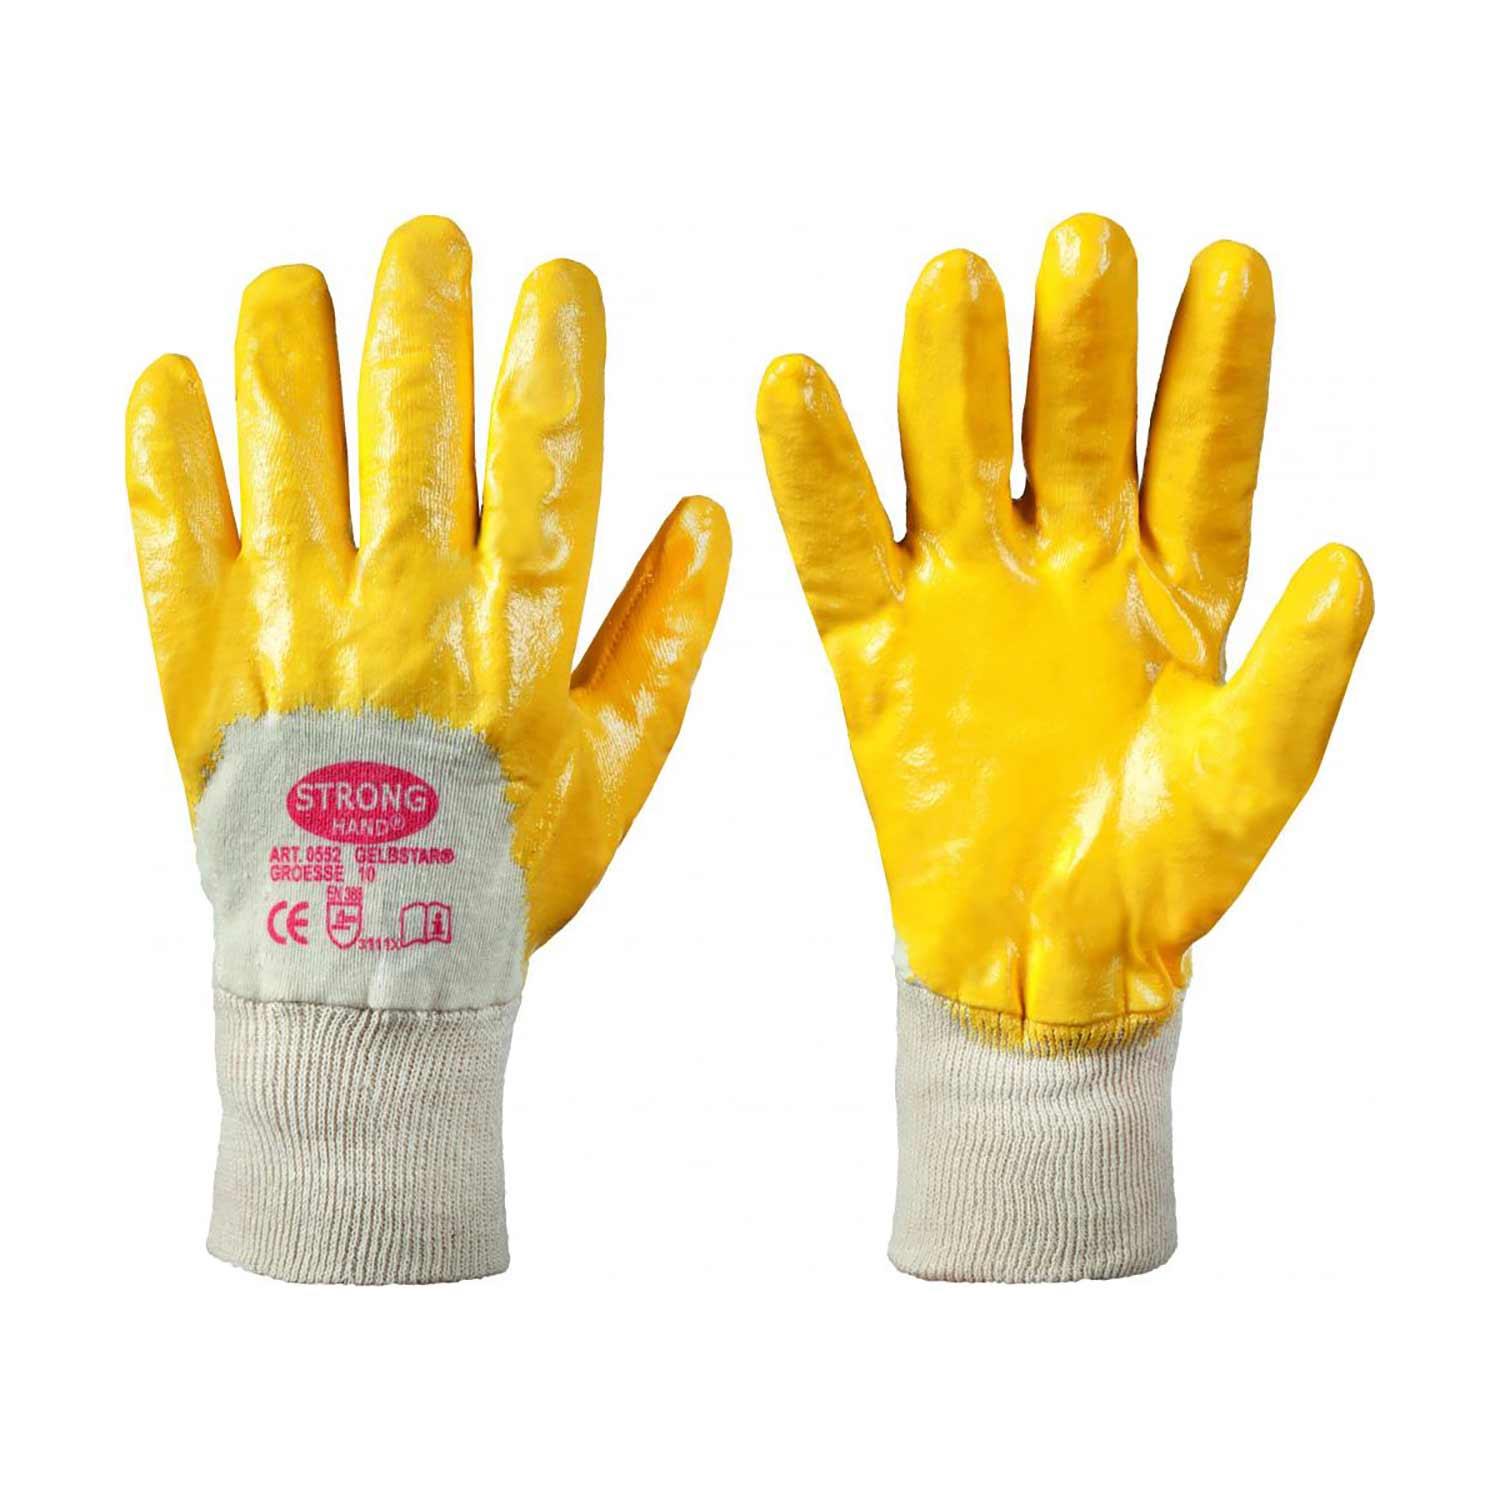 Gelbstar Stronghand Nitril Handschuh